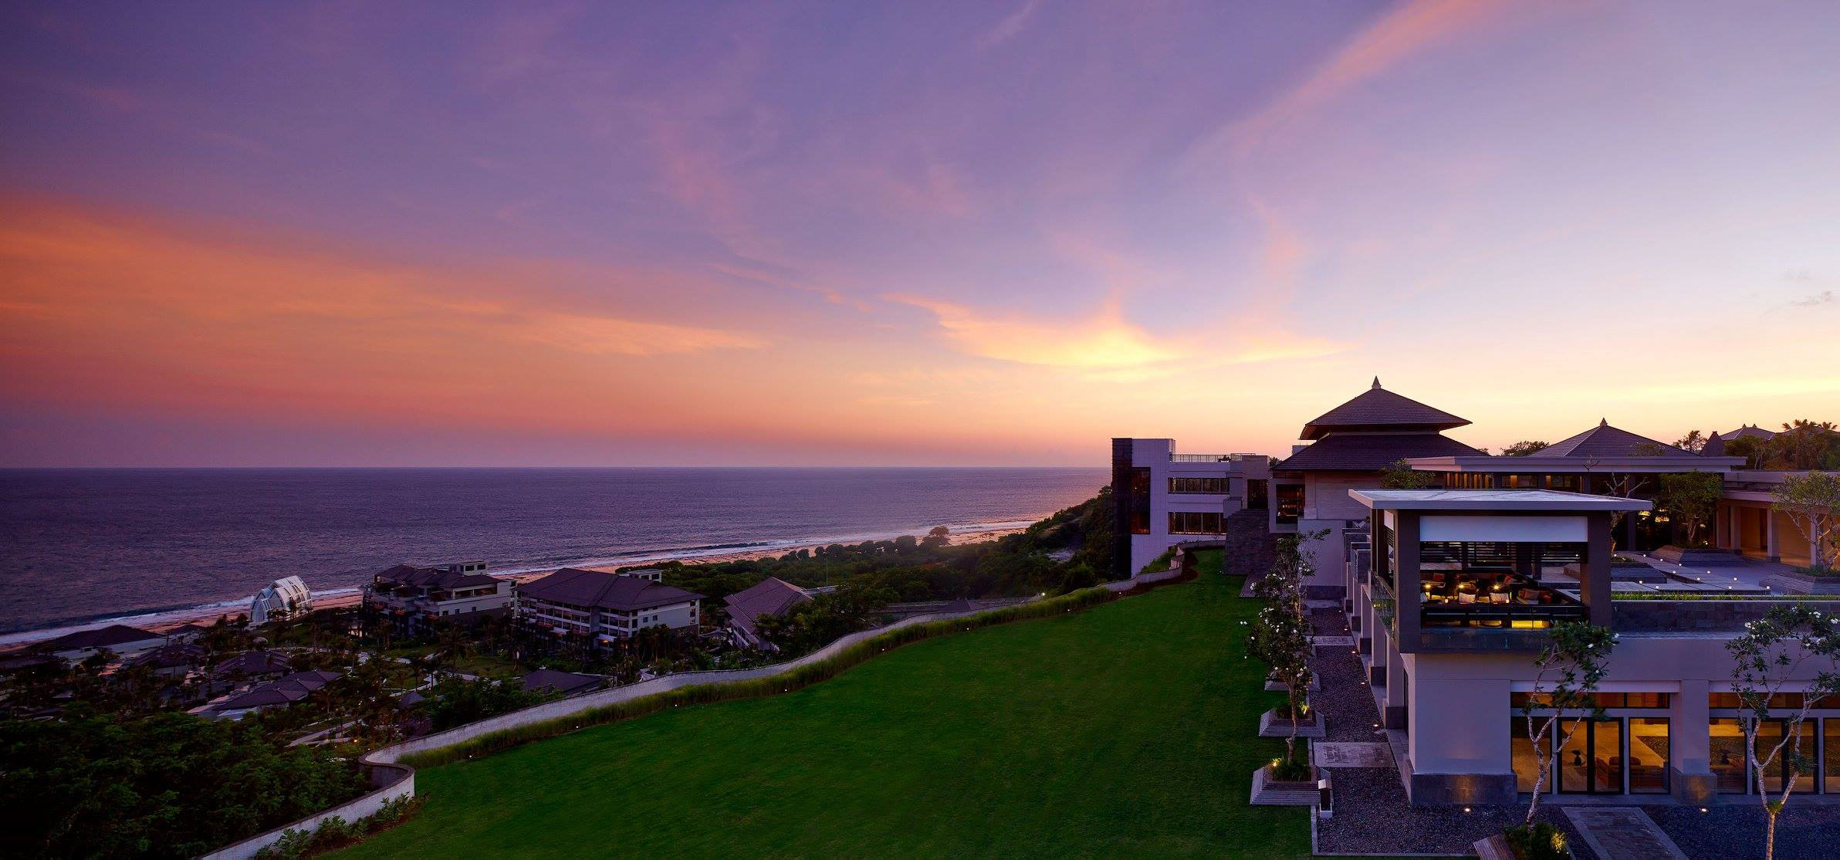 The Ritz-Carlton, Bali Nusa Dua Hotel – Bali, Indonesia – Resort Sunset View